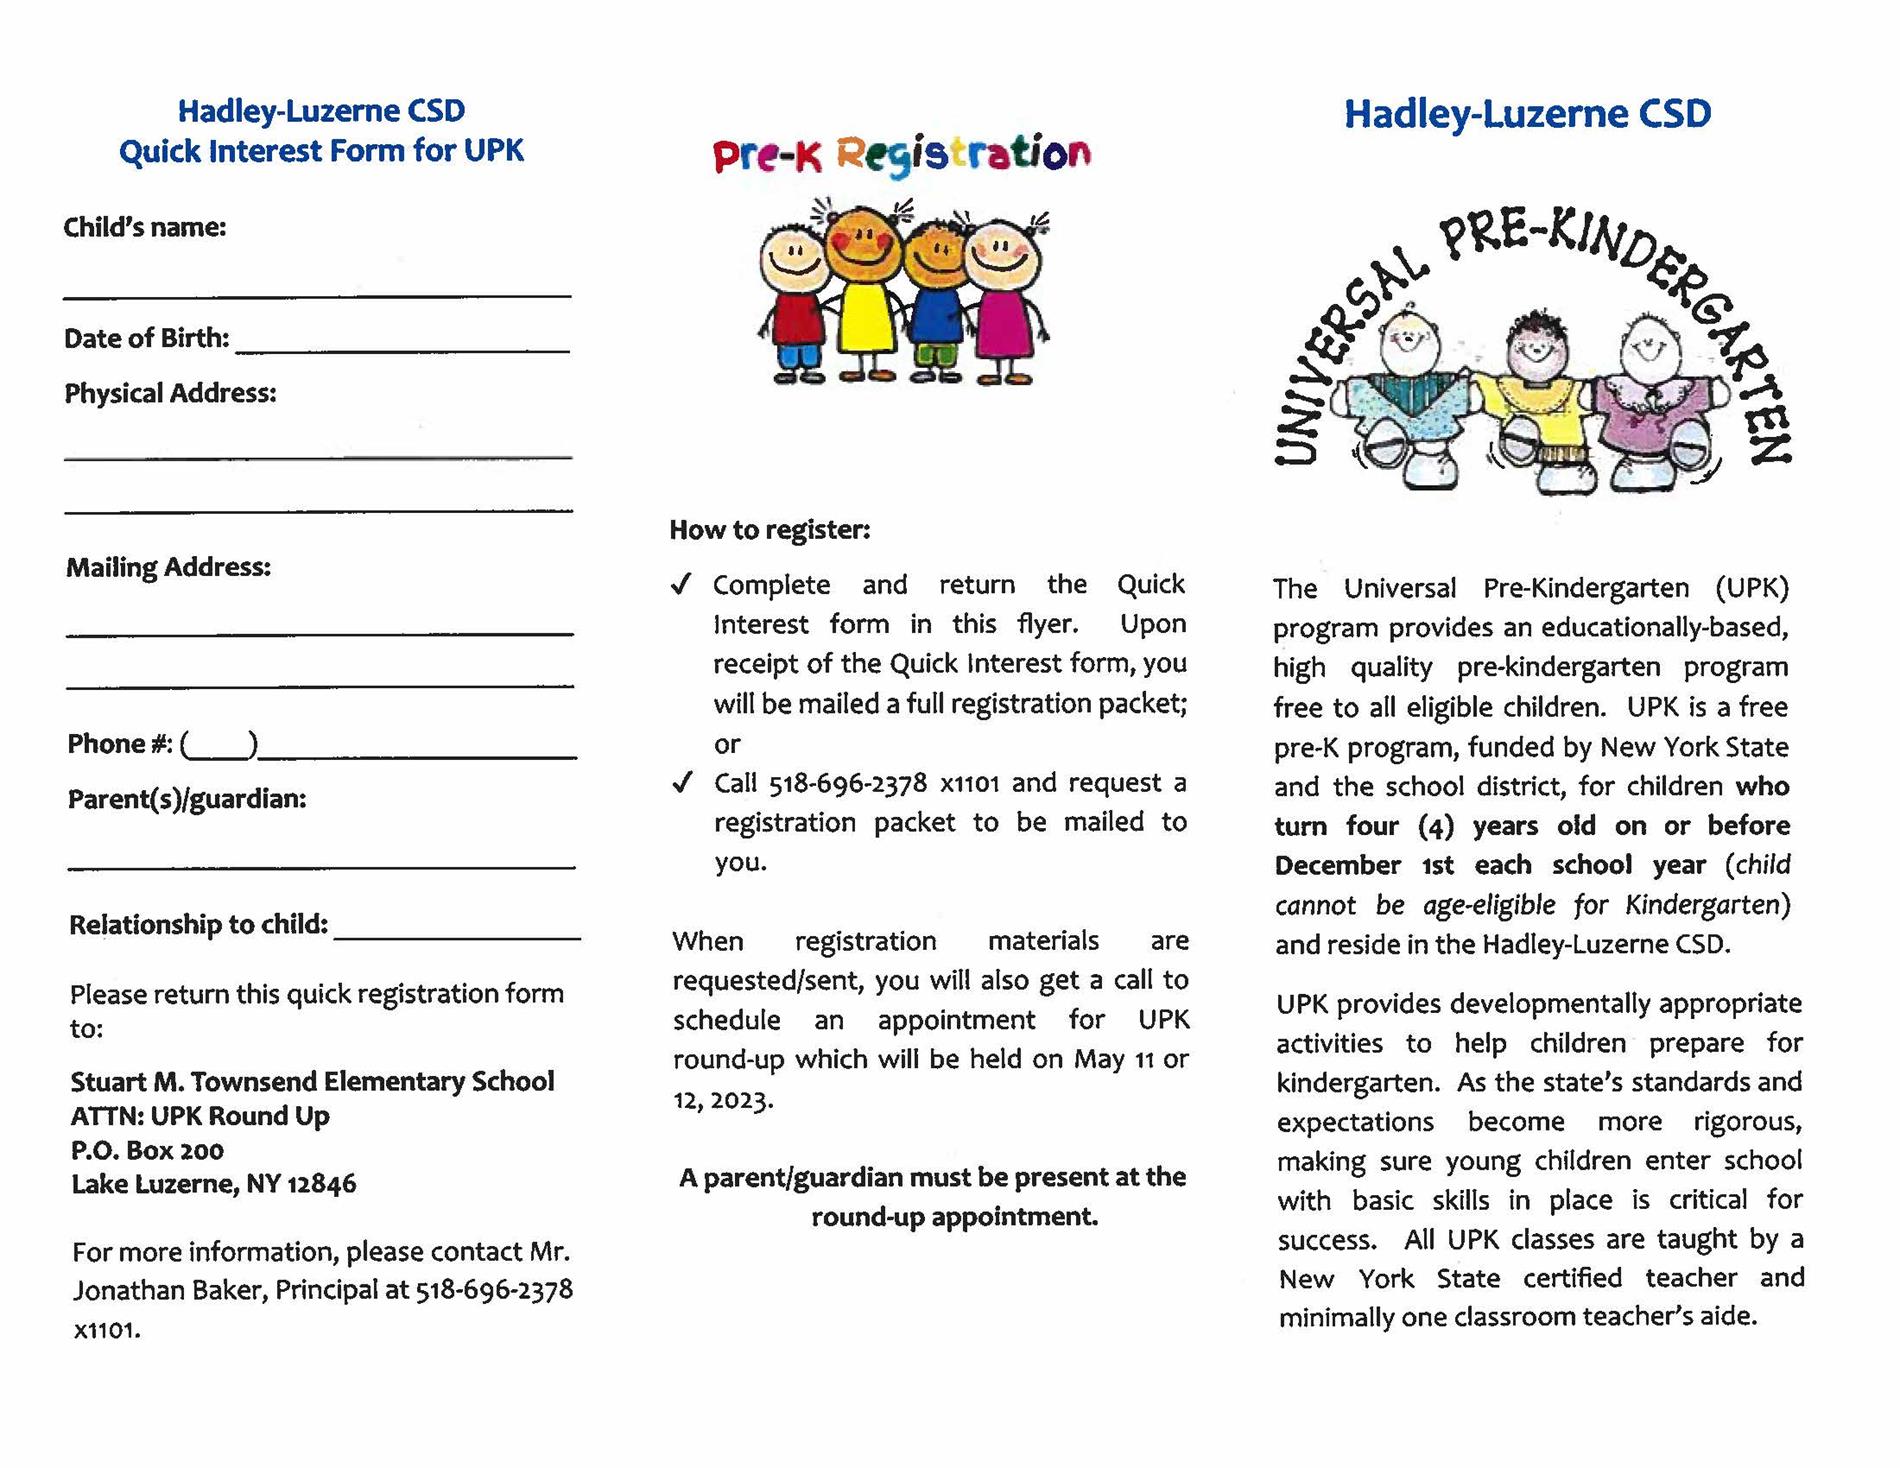 H-L UPK Program page 2